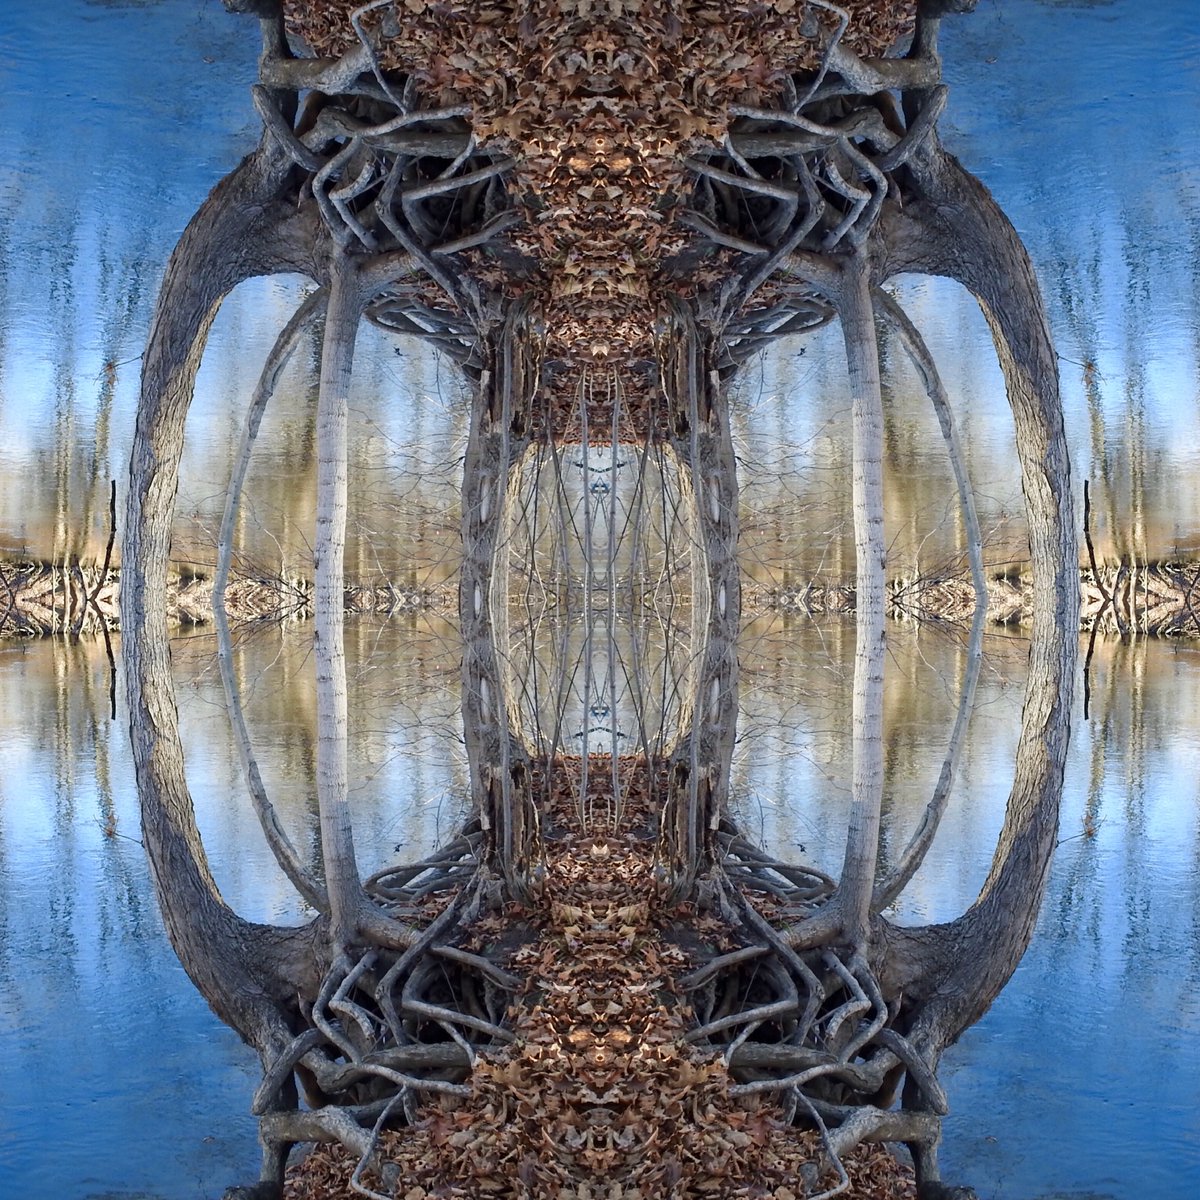 My next #SymmetreeSunday image. 

#SymmetrySunday #symmetry #trees #symmetryart #NaturePhotography